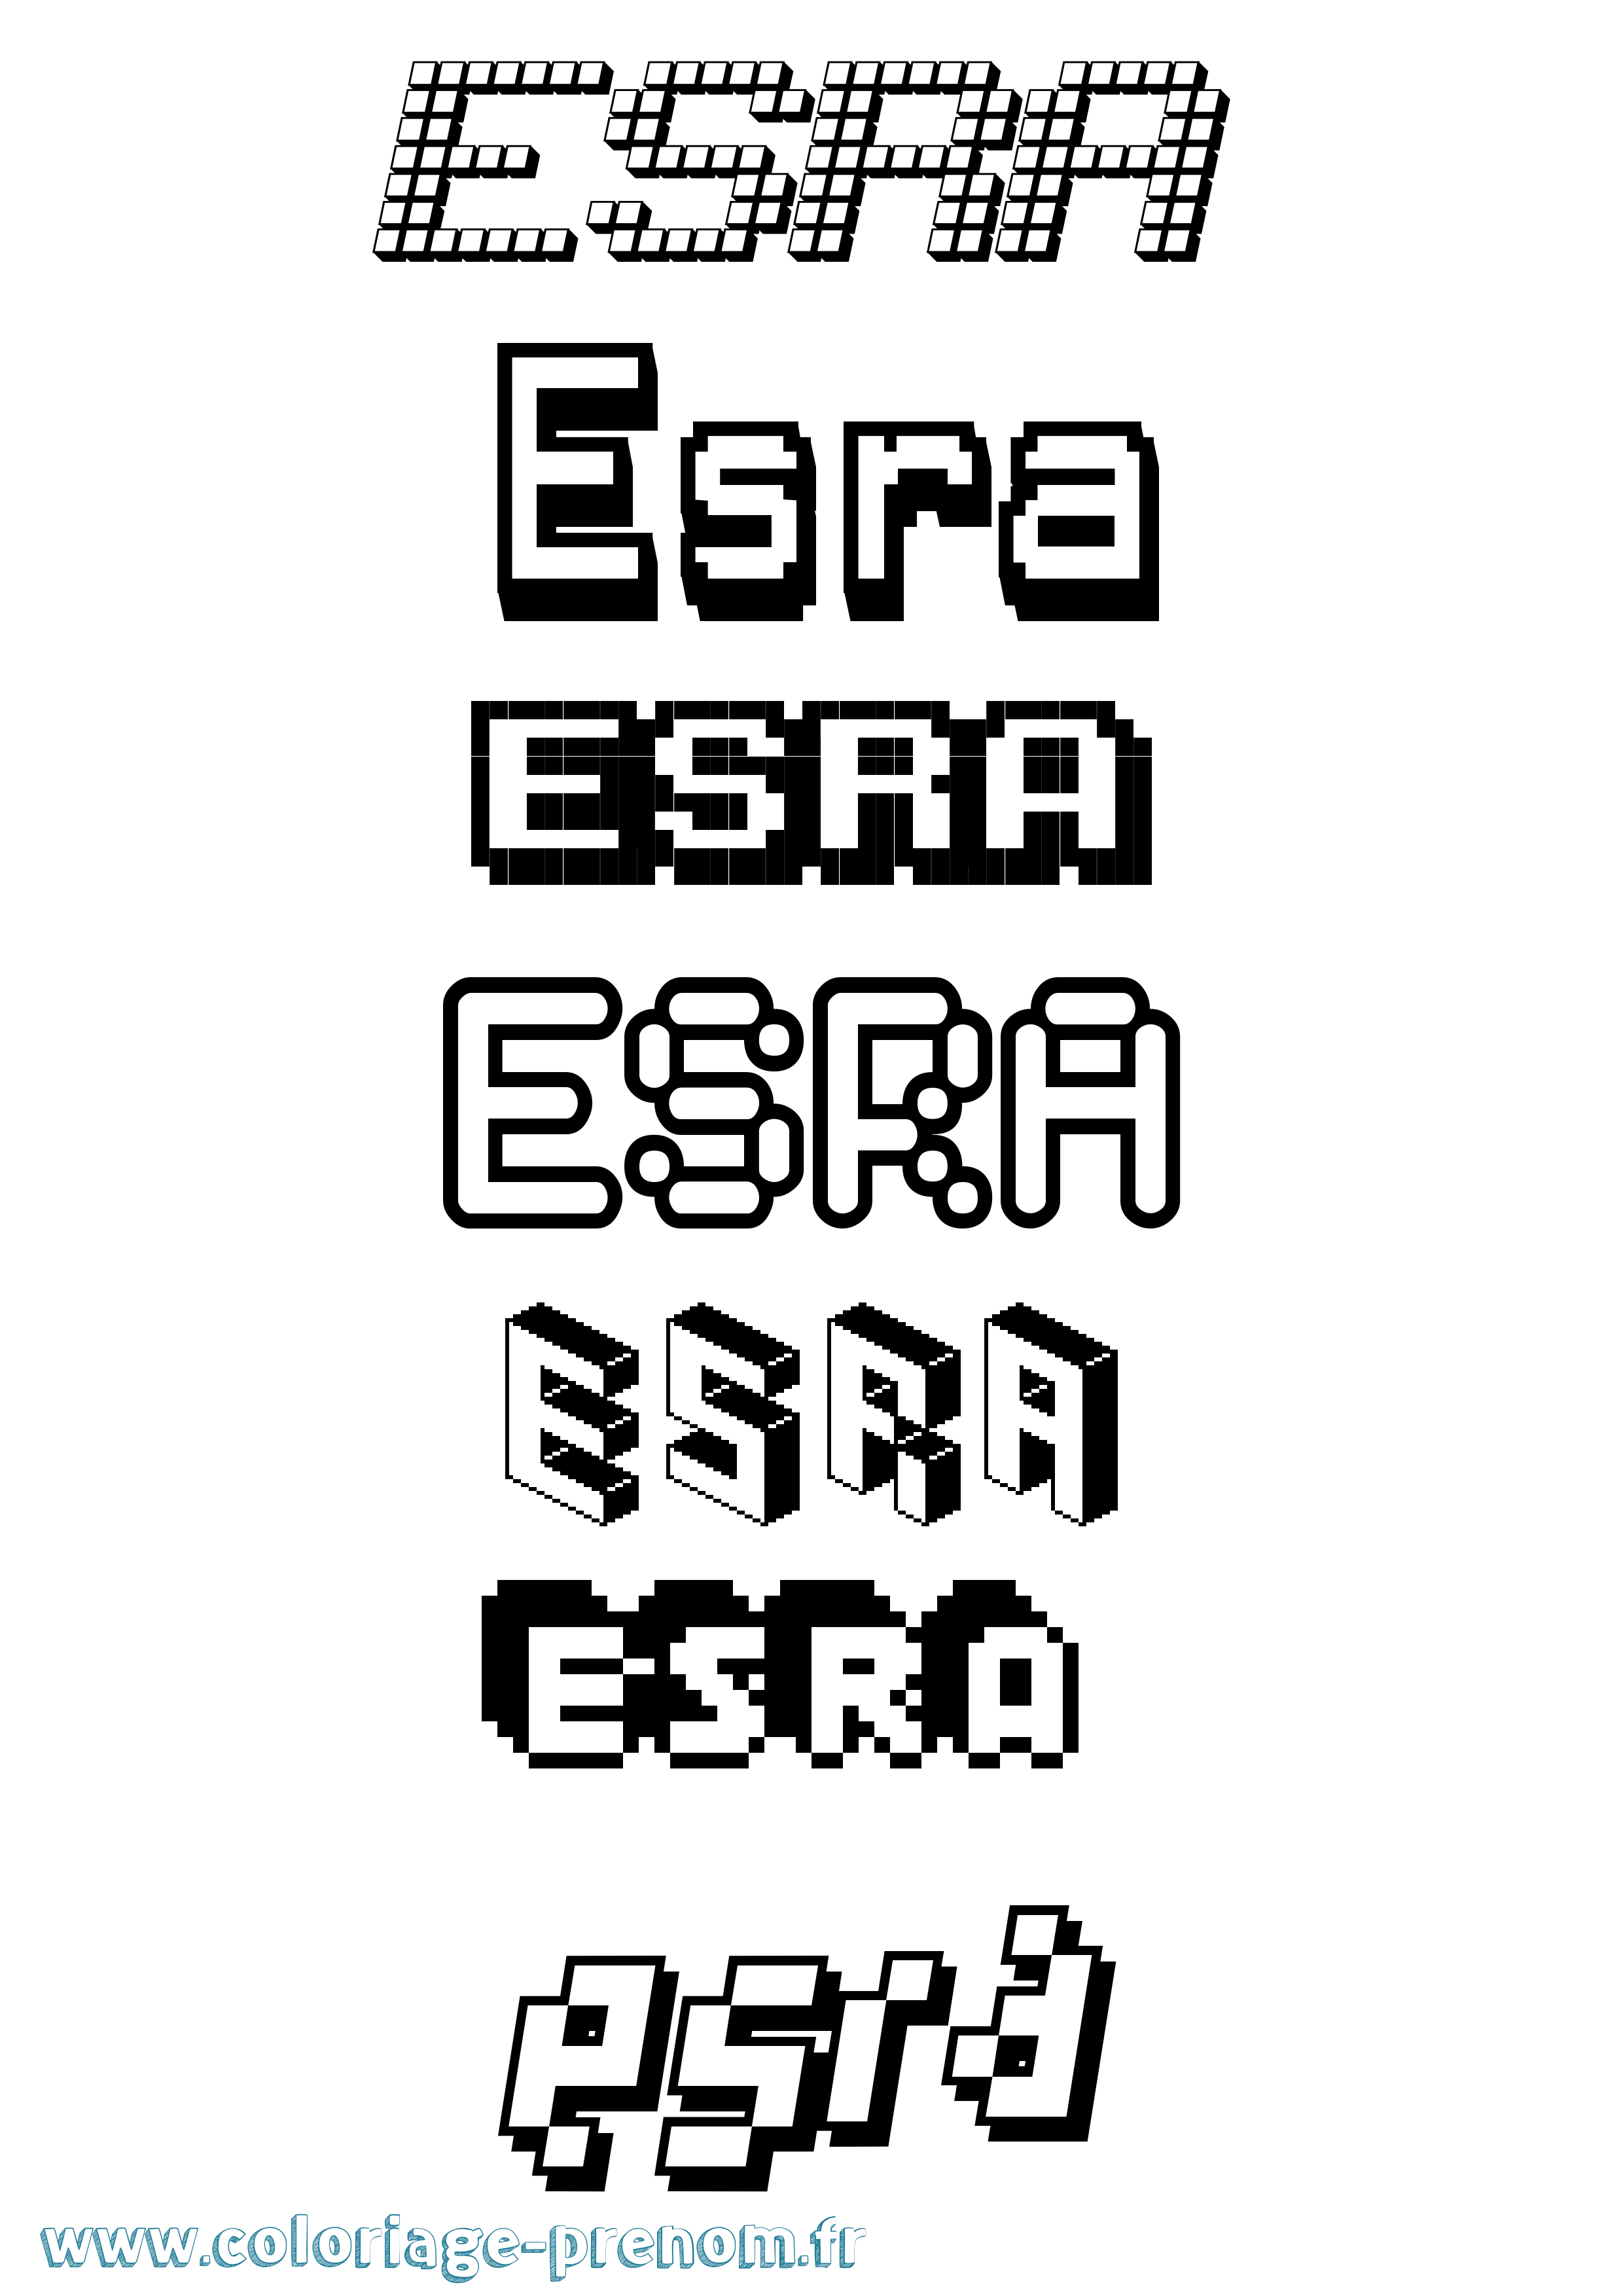 Coloriage prénom Esra Pixel